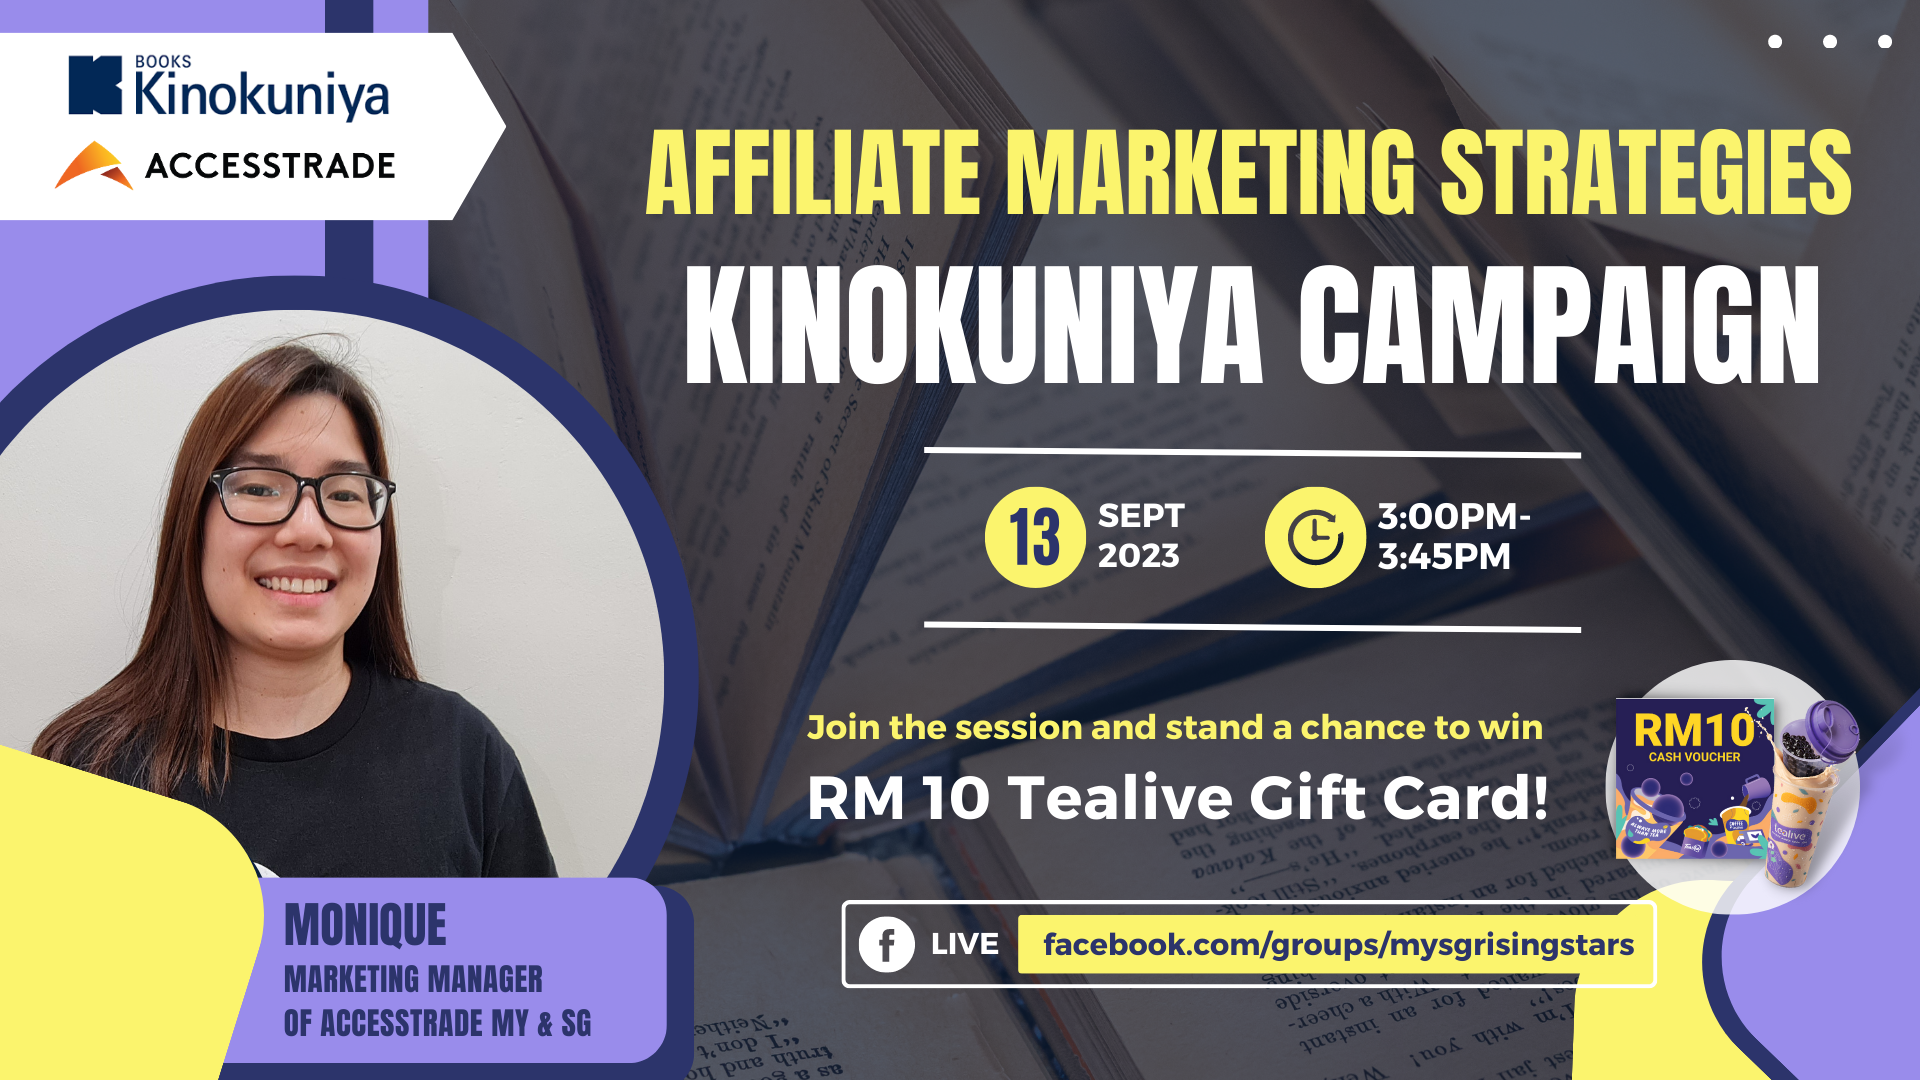 Affiliate Marketing Strategies for Kinokuniya Campaign